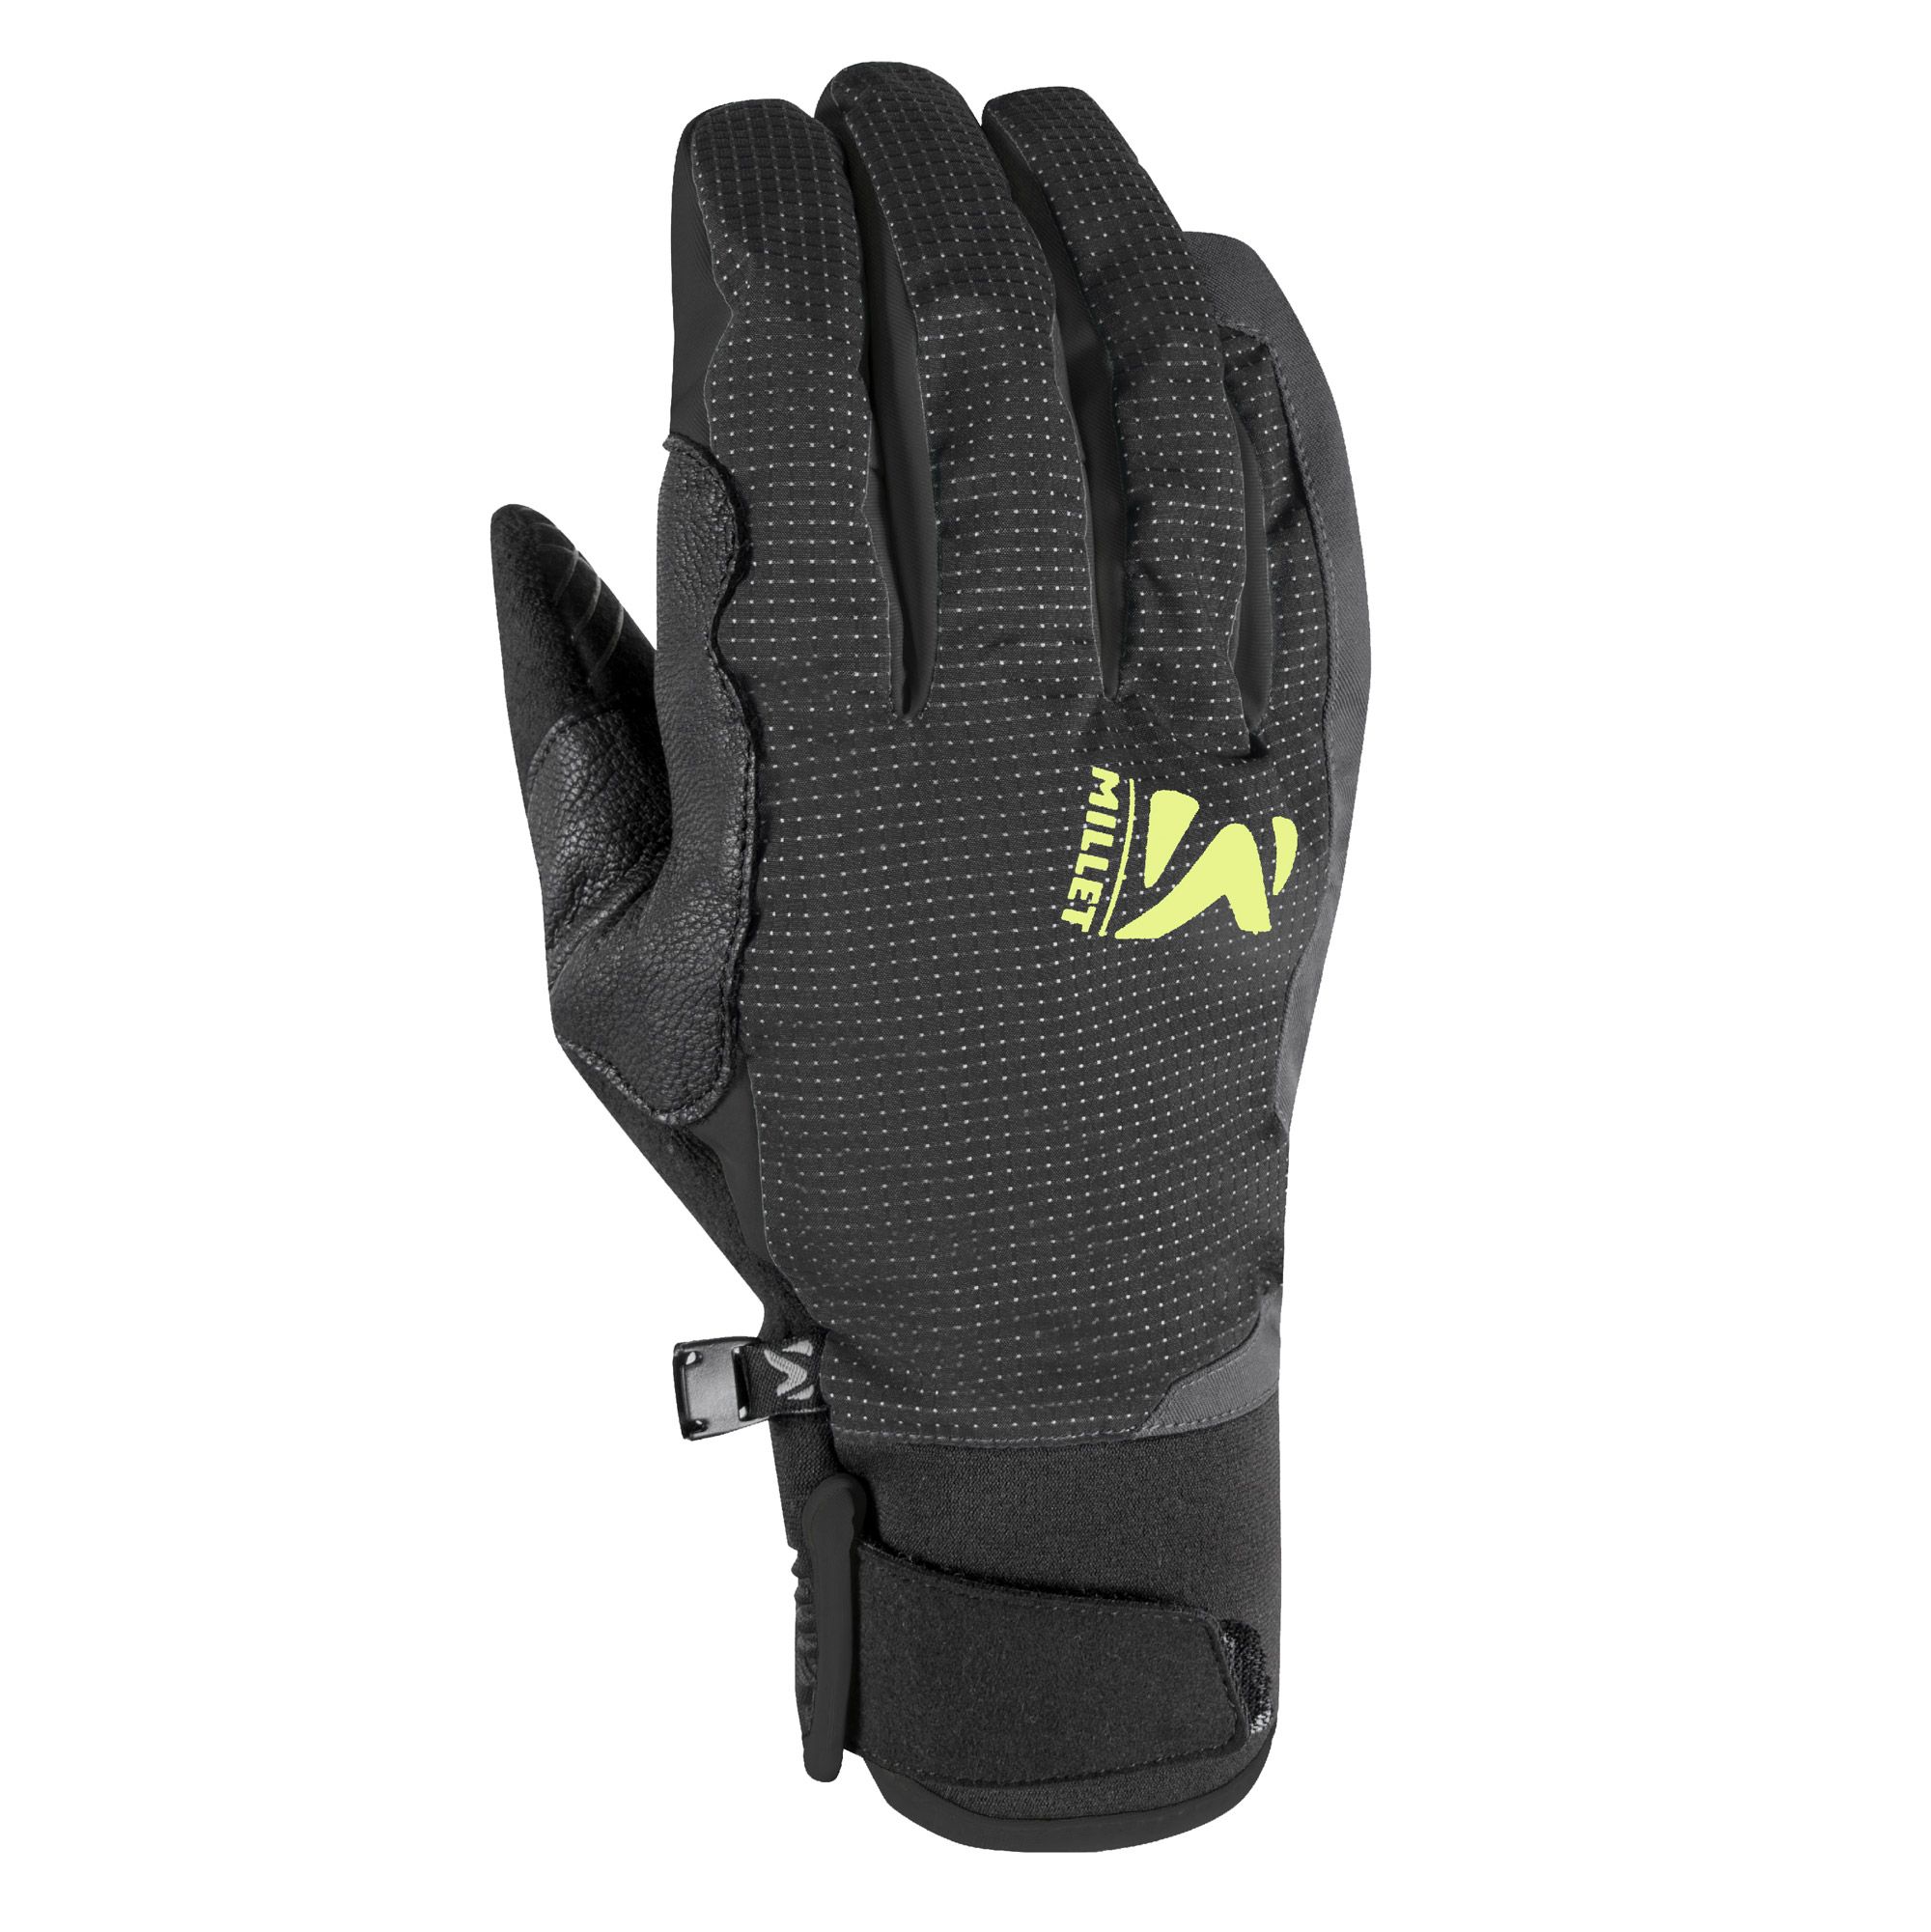 Gants de Ski de Randonnée Touring Glove - Black